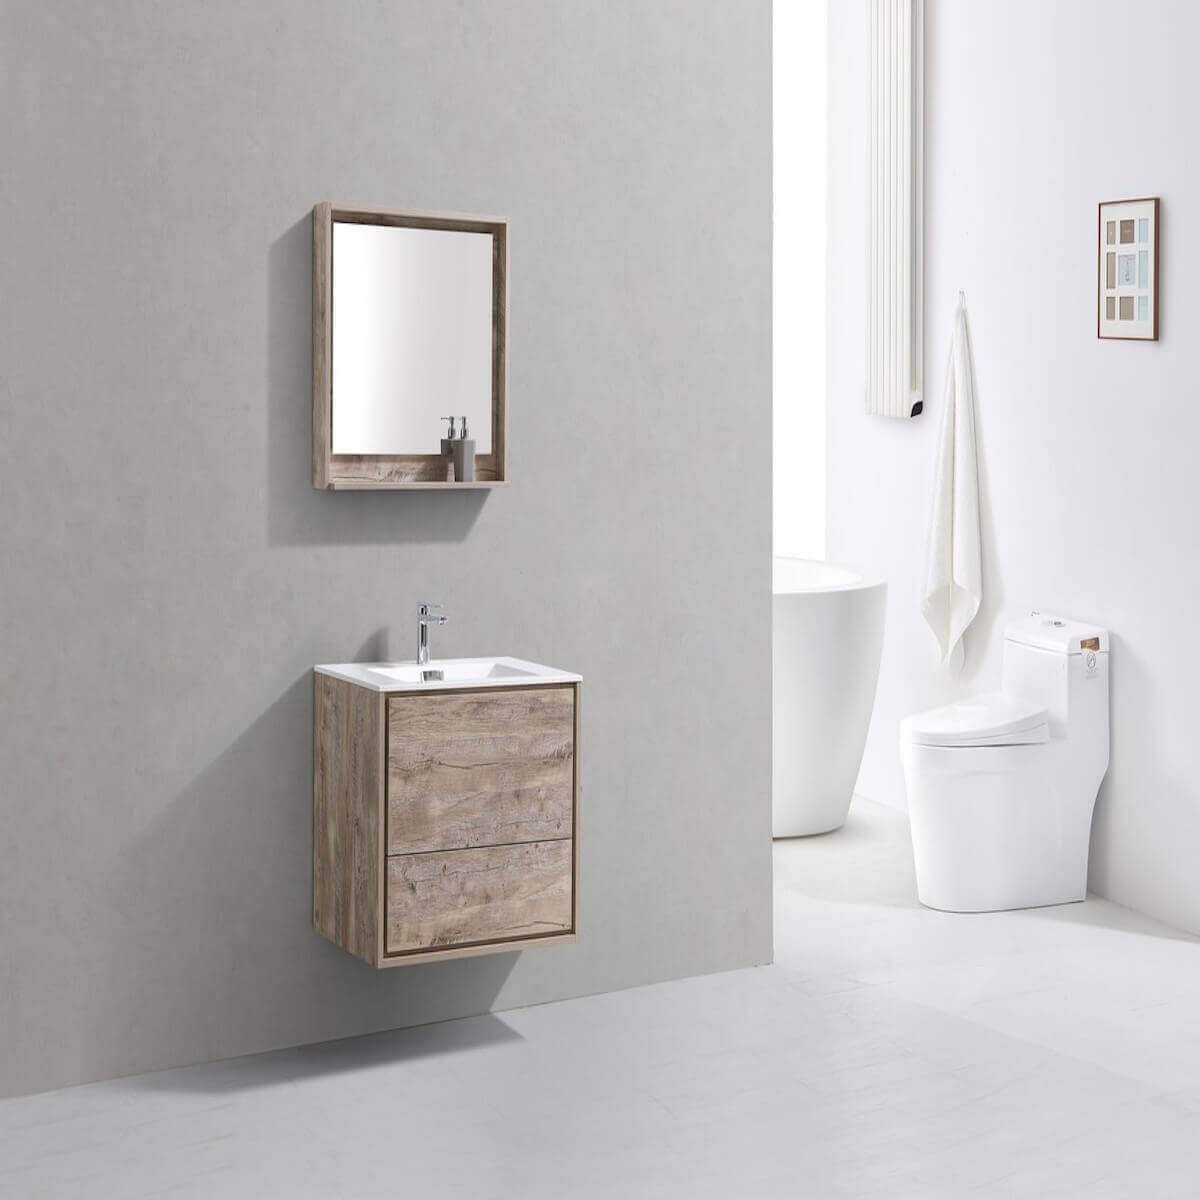 KubeBath DeLusso 30" Nature Wood Wall Mount Single Vanity DL30-NW in Bathroom #finish_nature wood